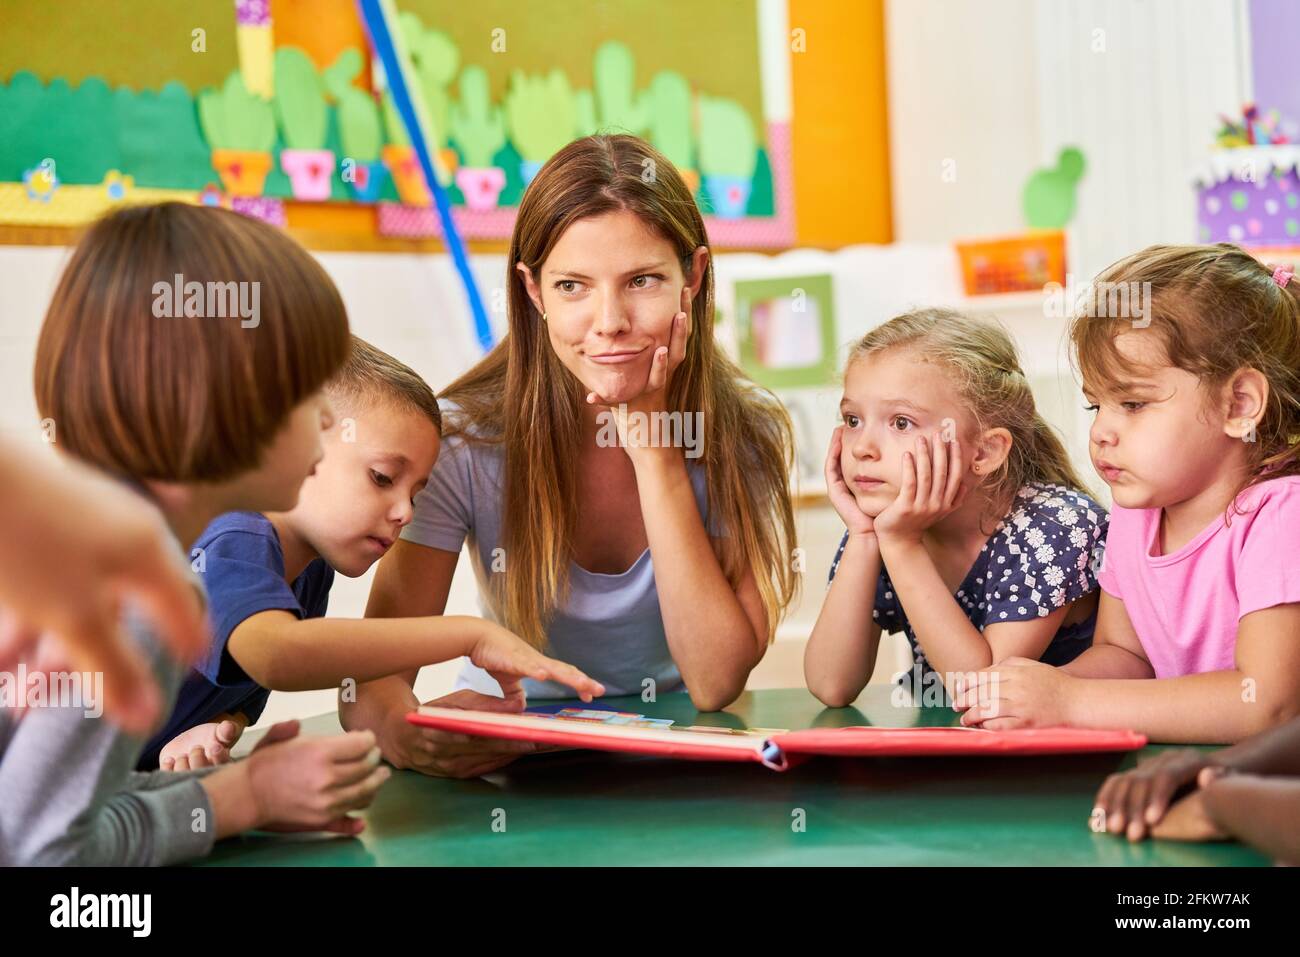 Childminder or kindergarten teacher and children read and play together in kindergarten Stock Photo